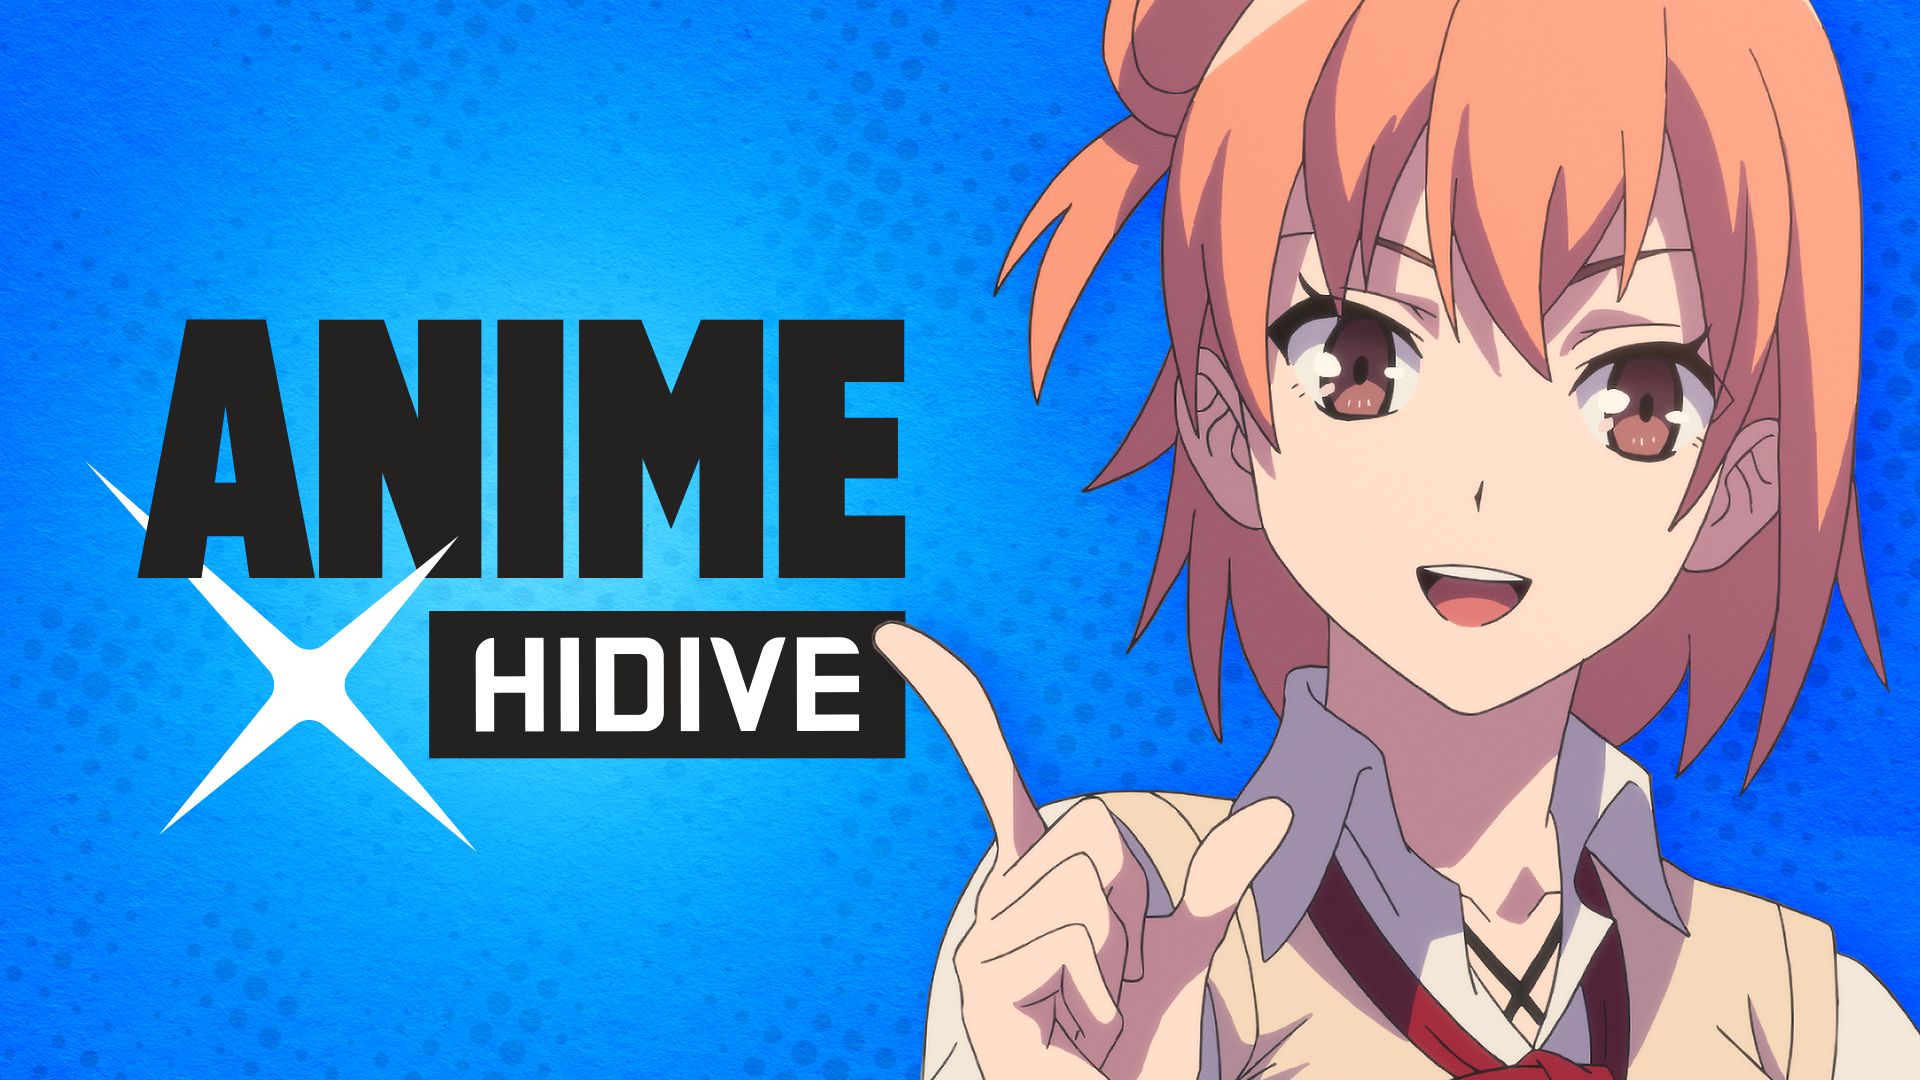 HIDIVE: Watch & Stream Anime online